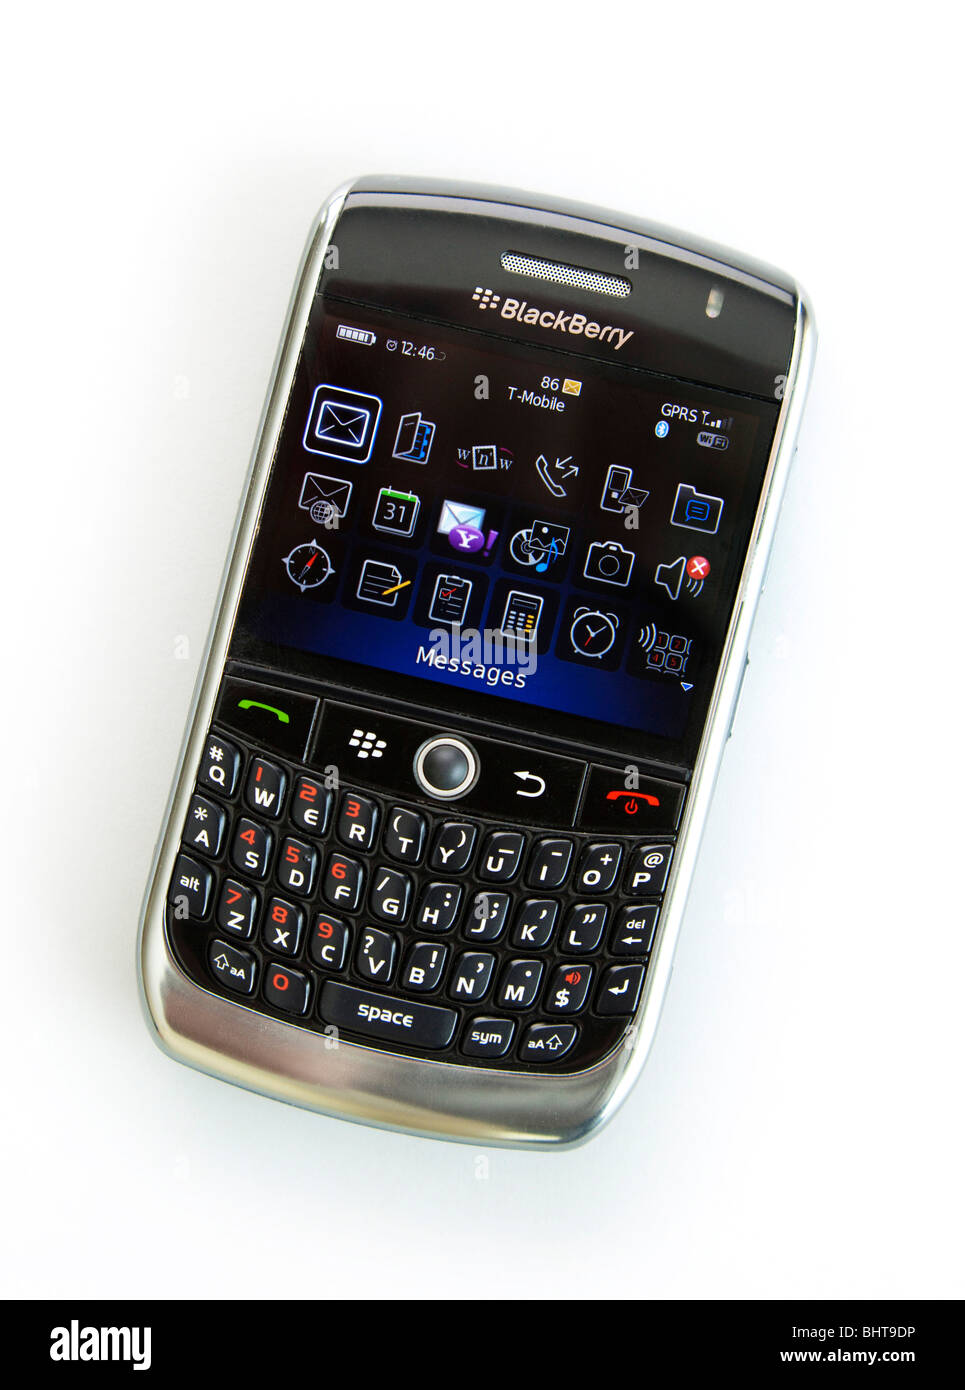 Blackberry Curve 8900 mobile phone Stock Photo